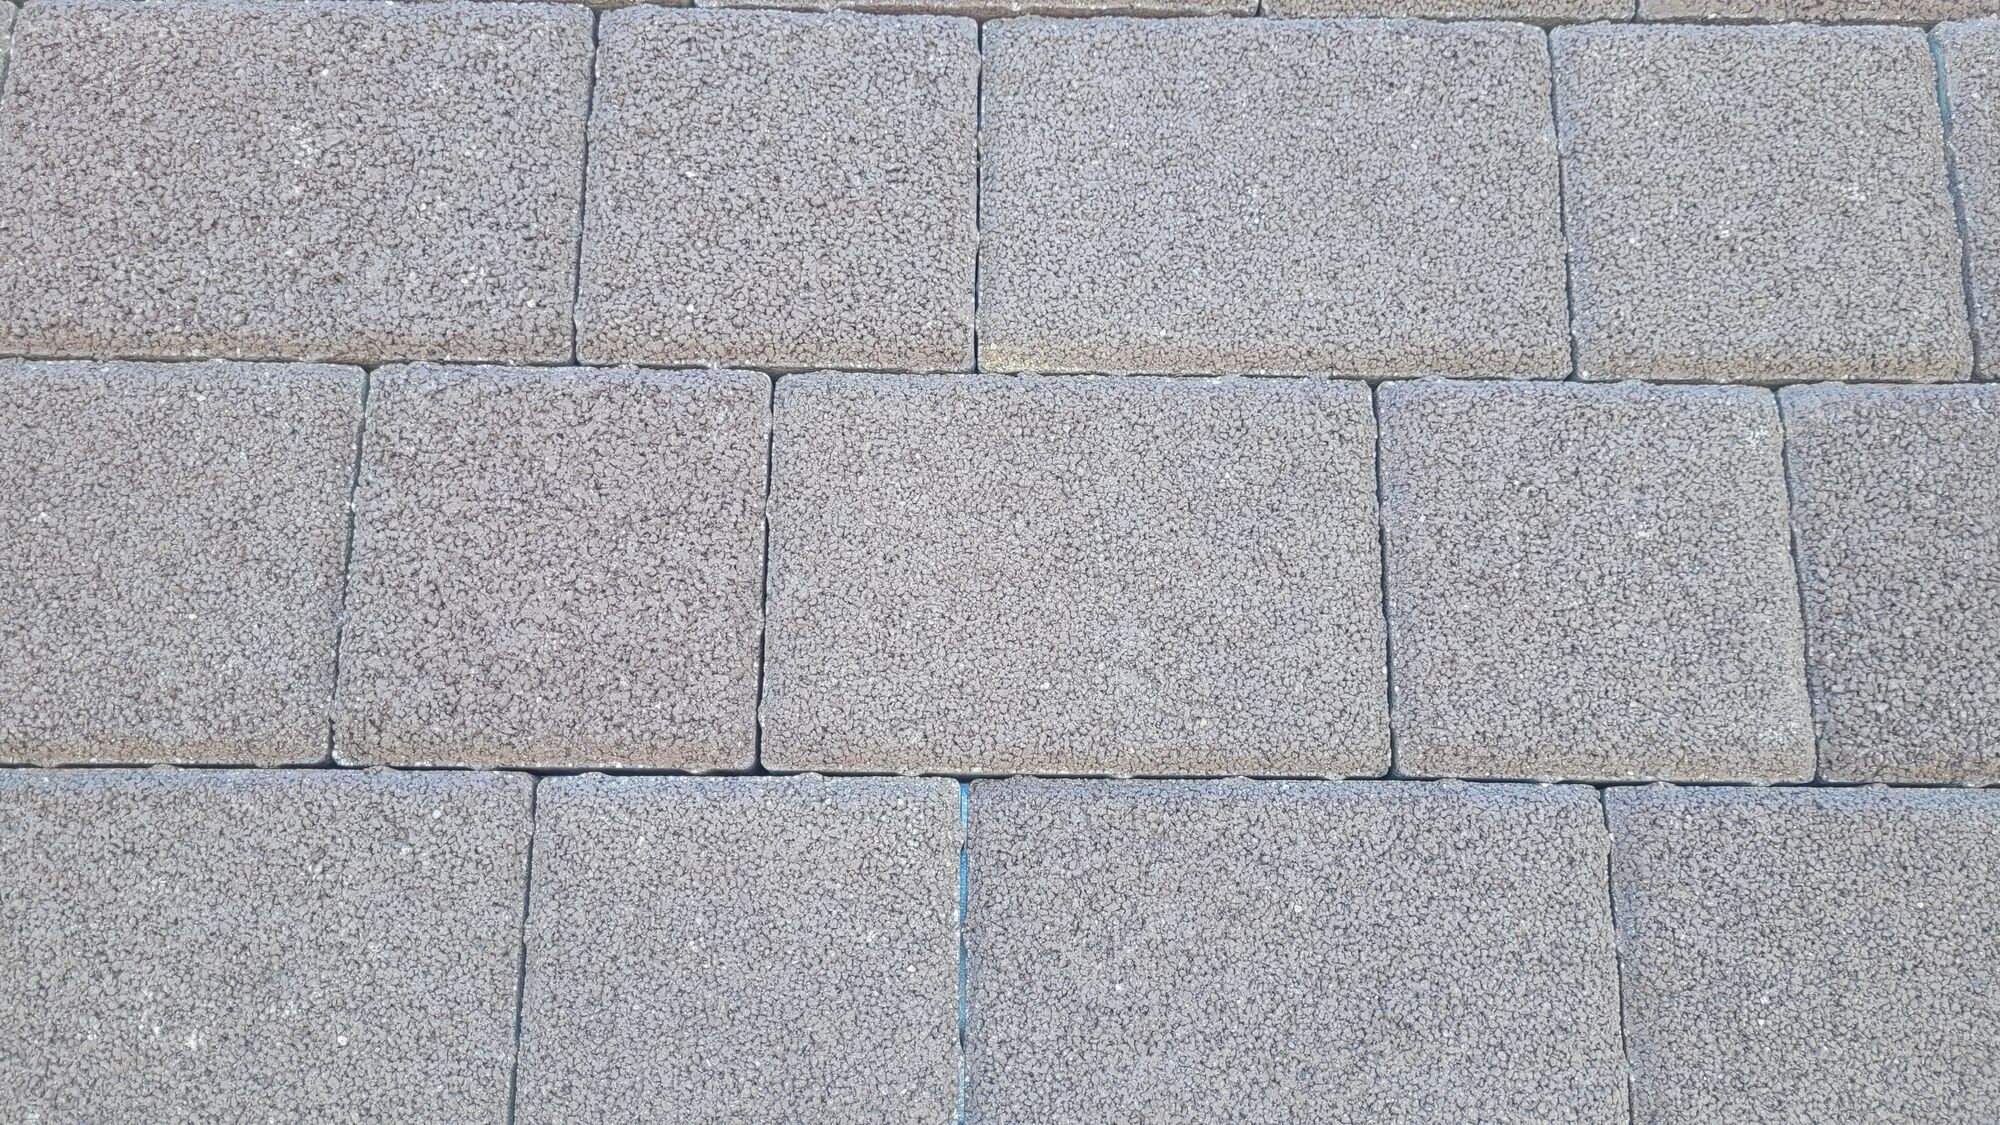 Плитка тротуарная рельефная 148х148, 148х110, 223х148 мм h 6, Аурико однотонный